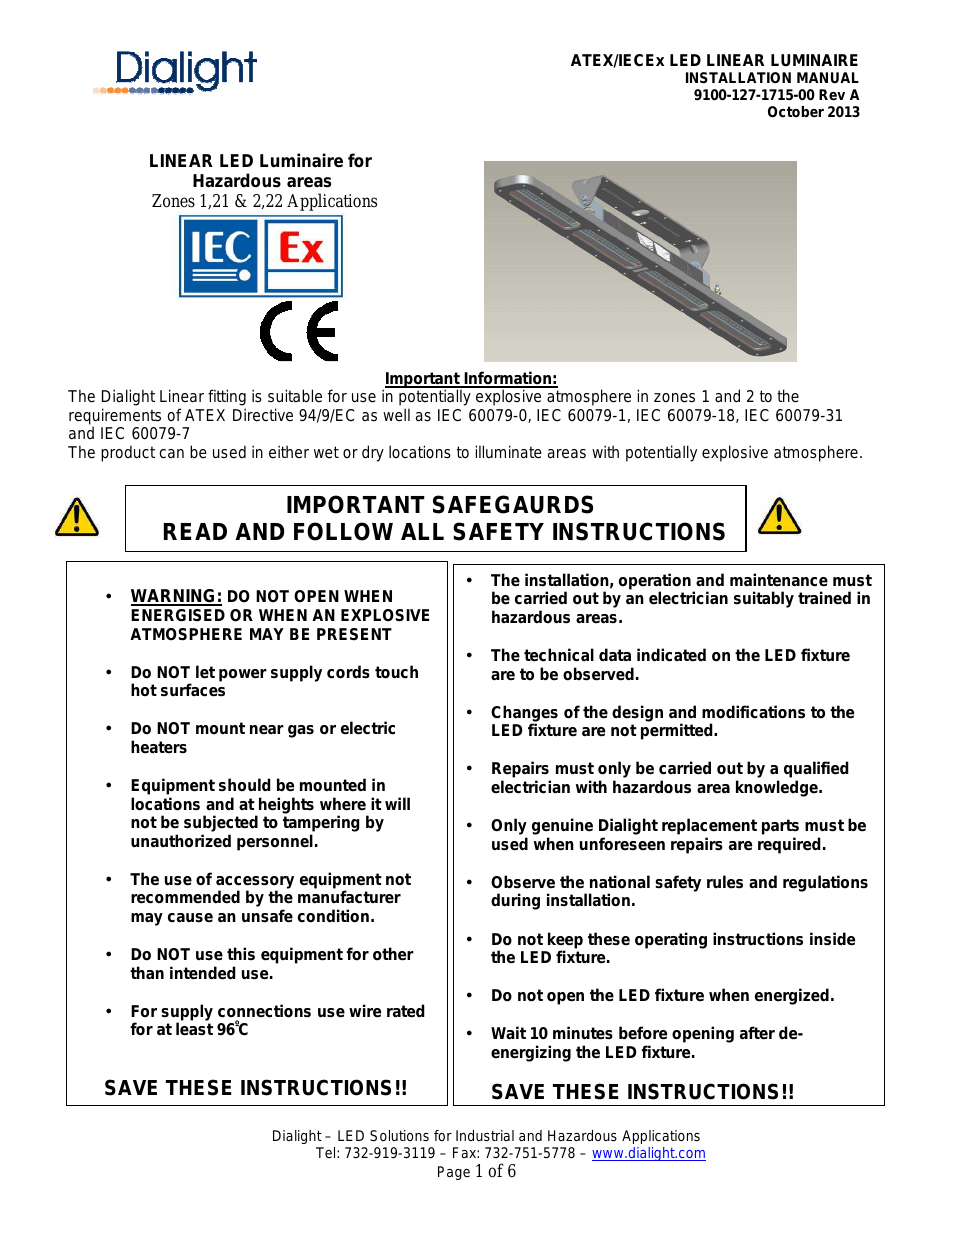 SafeSite LED Linear - ATEX/IECEx